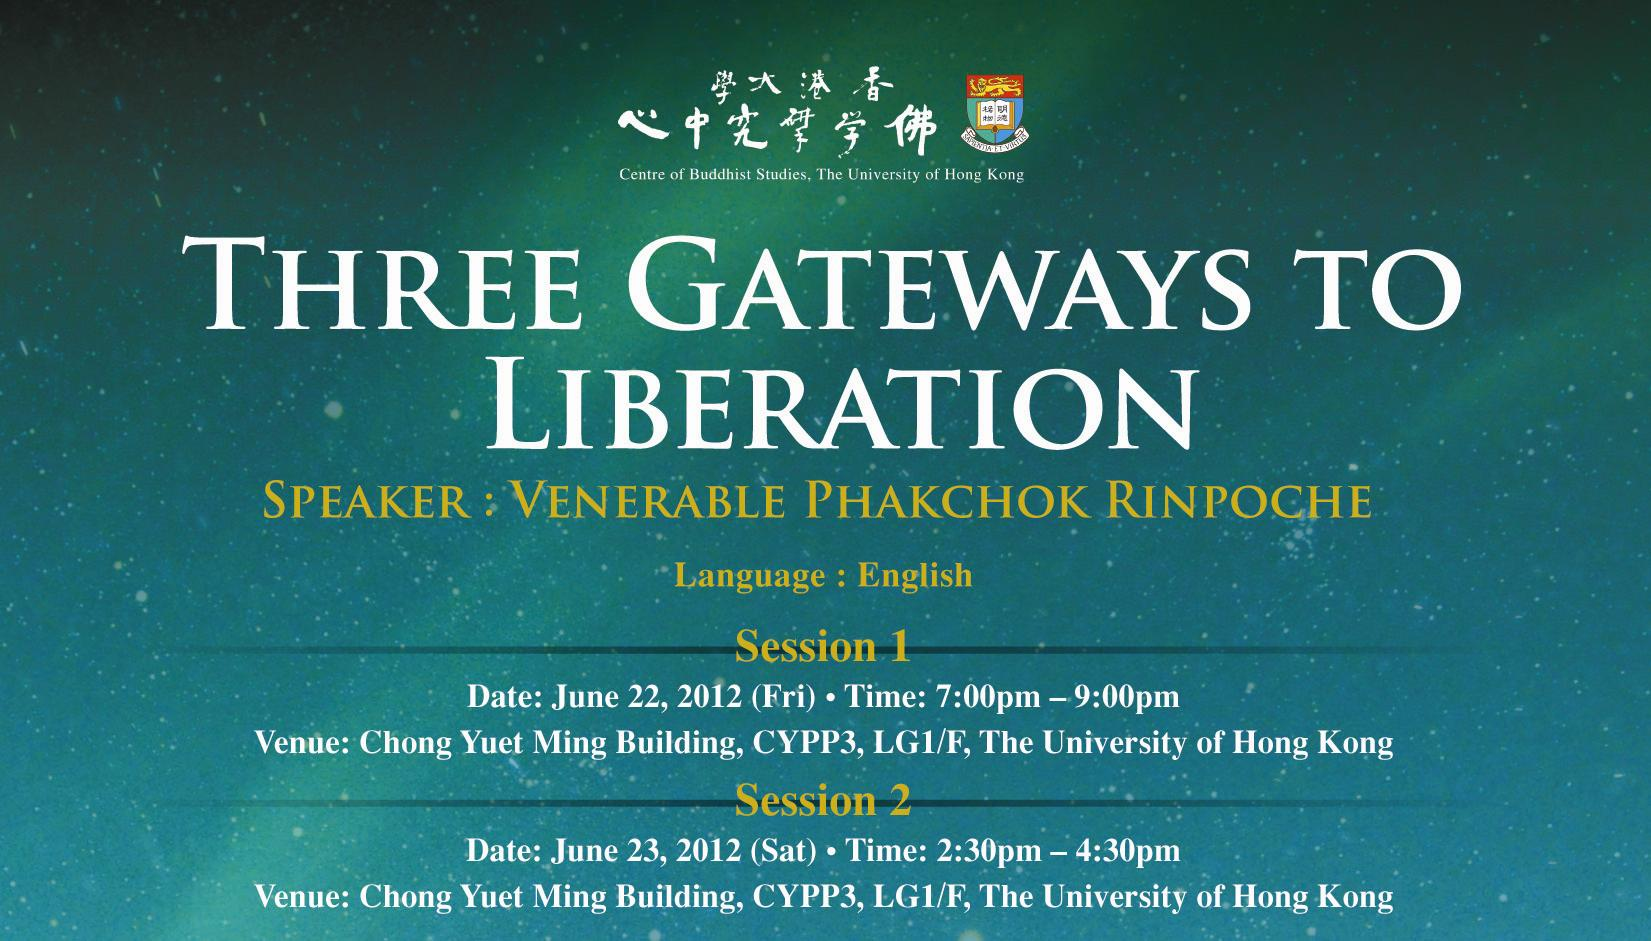 Buddhist Lecture by Venerable Phakchok Rinpoche - Three Gateways to Liberation by Centre of Buddhist Studies, HKU